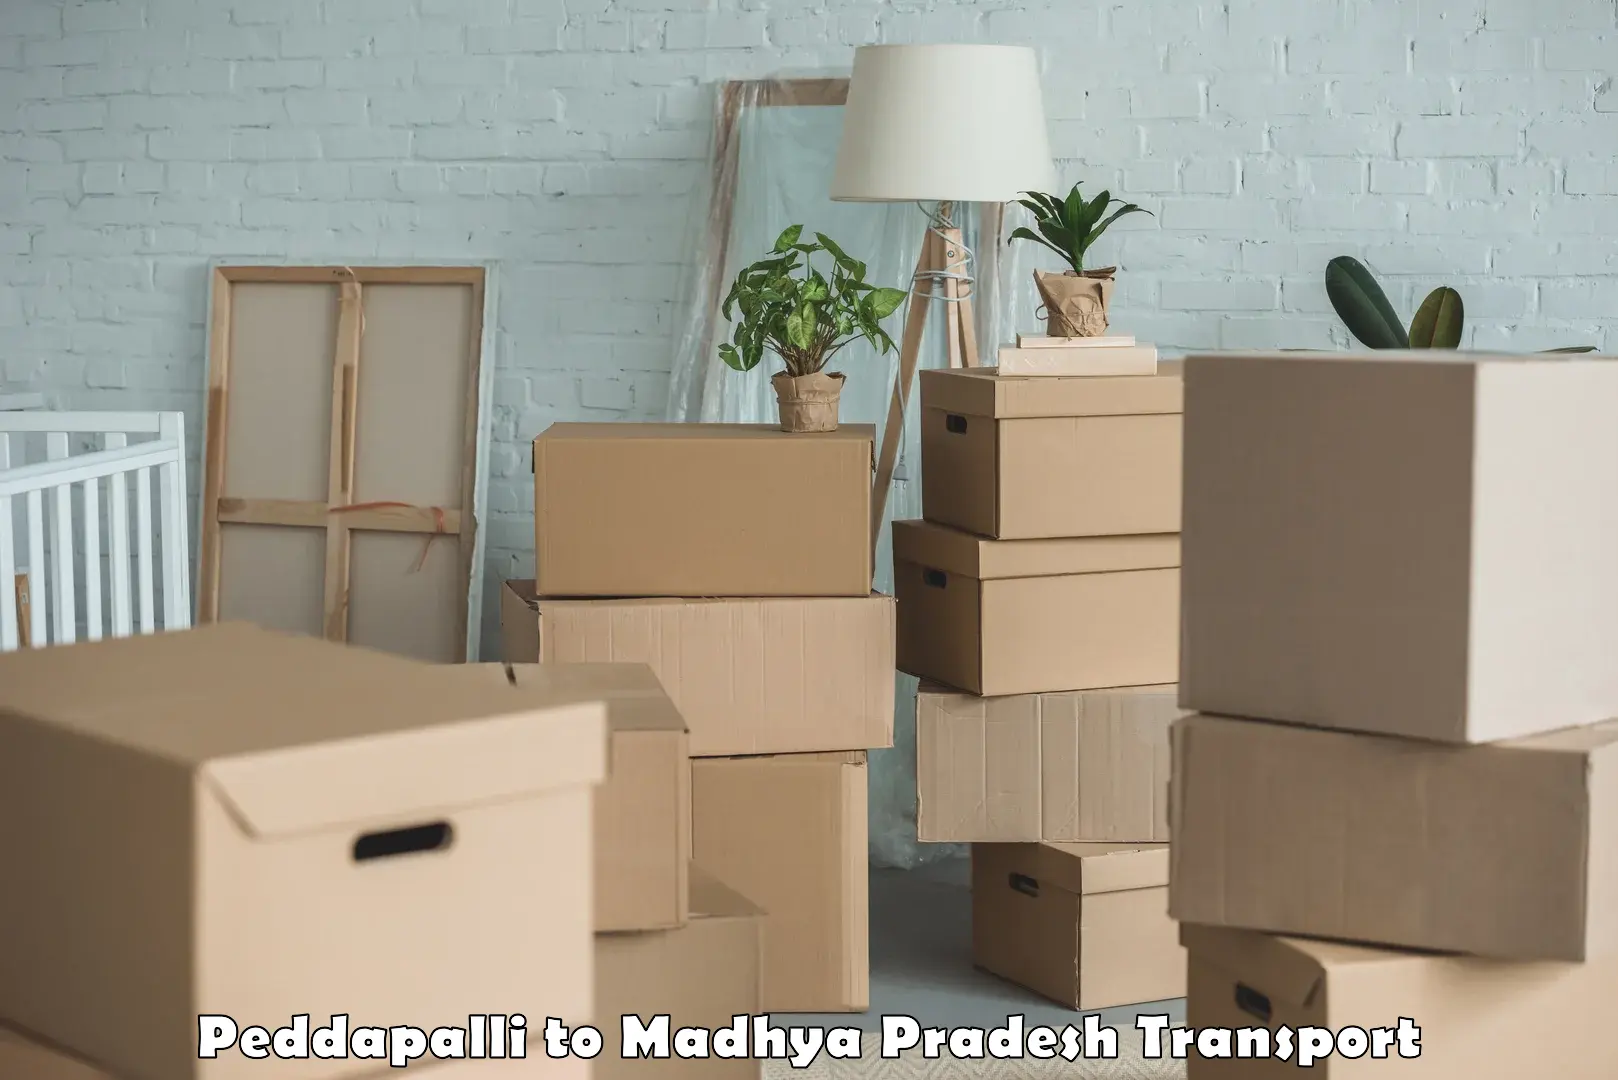 Daily parcel service transport Peddapalli to BHEL Bhopal